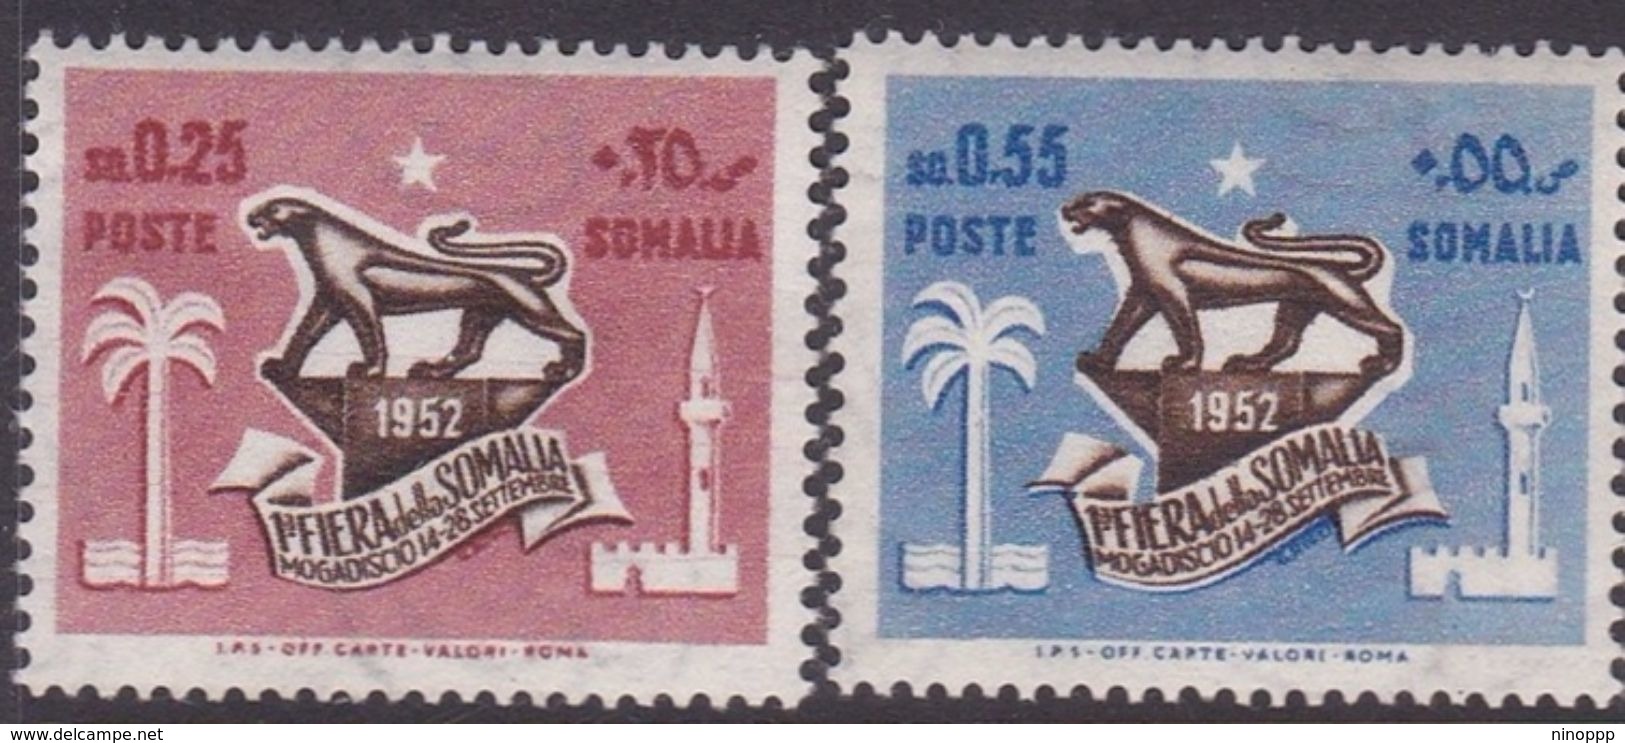 Somalia Scott 185-186 1952 First Somali Fair, Mint Never Hinged - Somalia (AFIS)